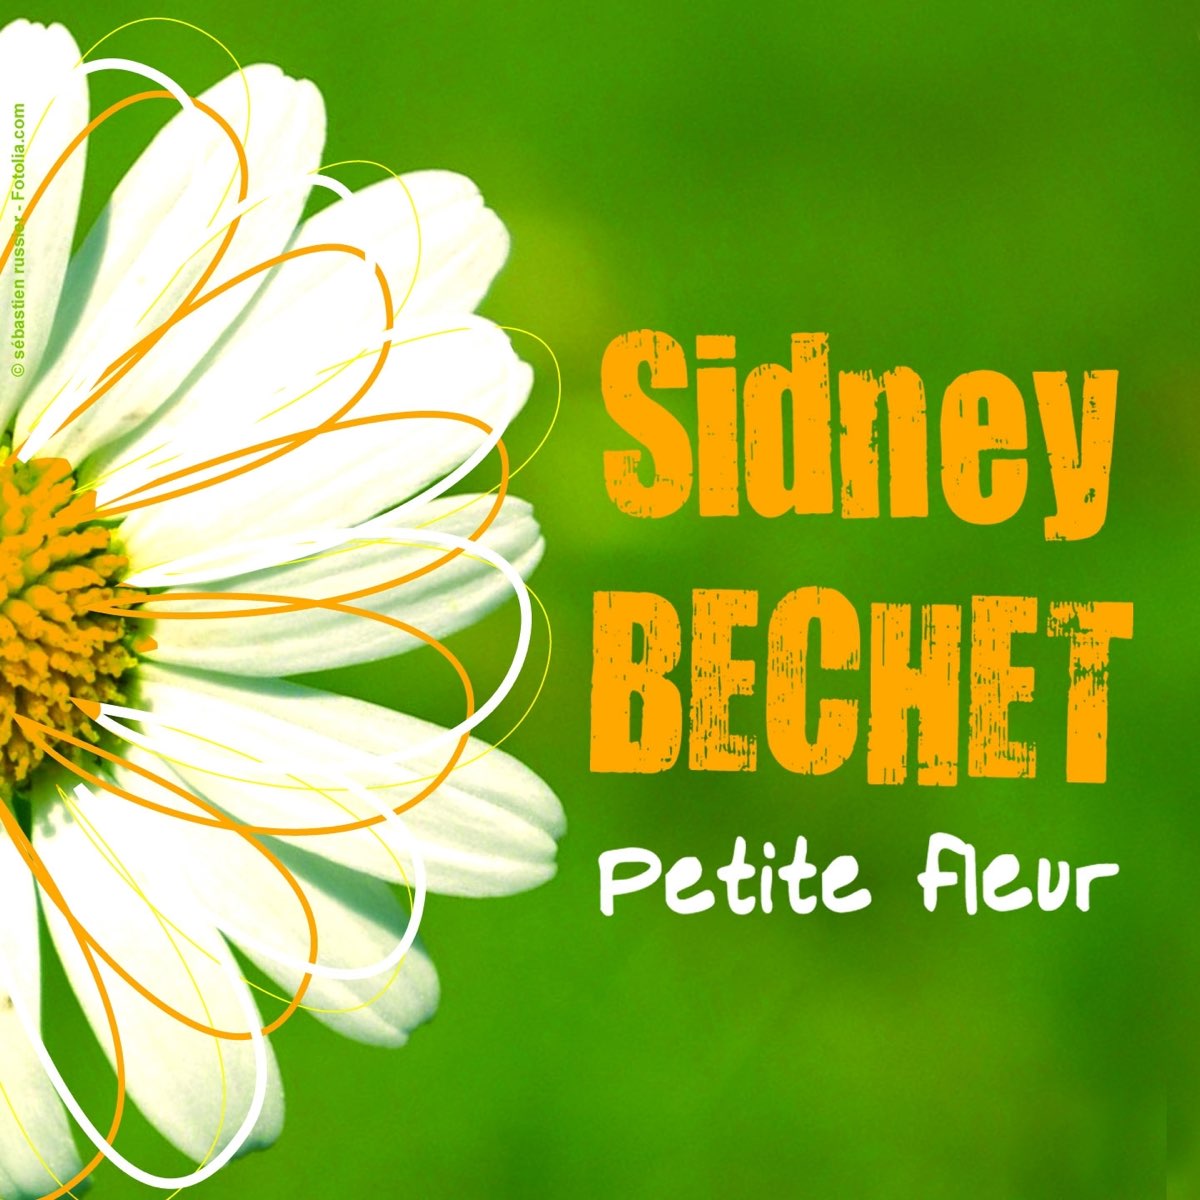 Petite Fleur By Sidney Bechet On Apple Music